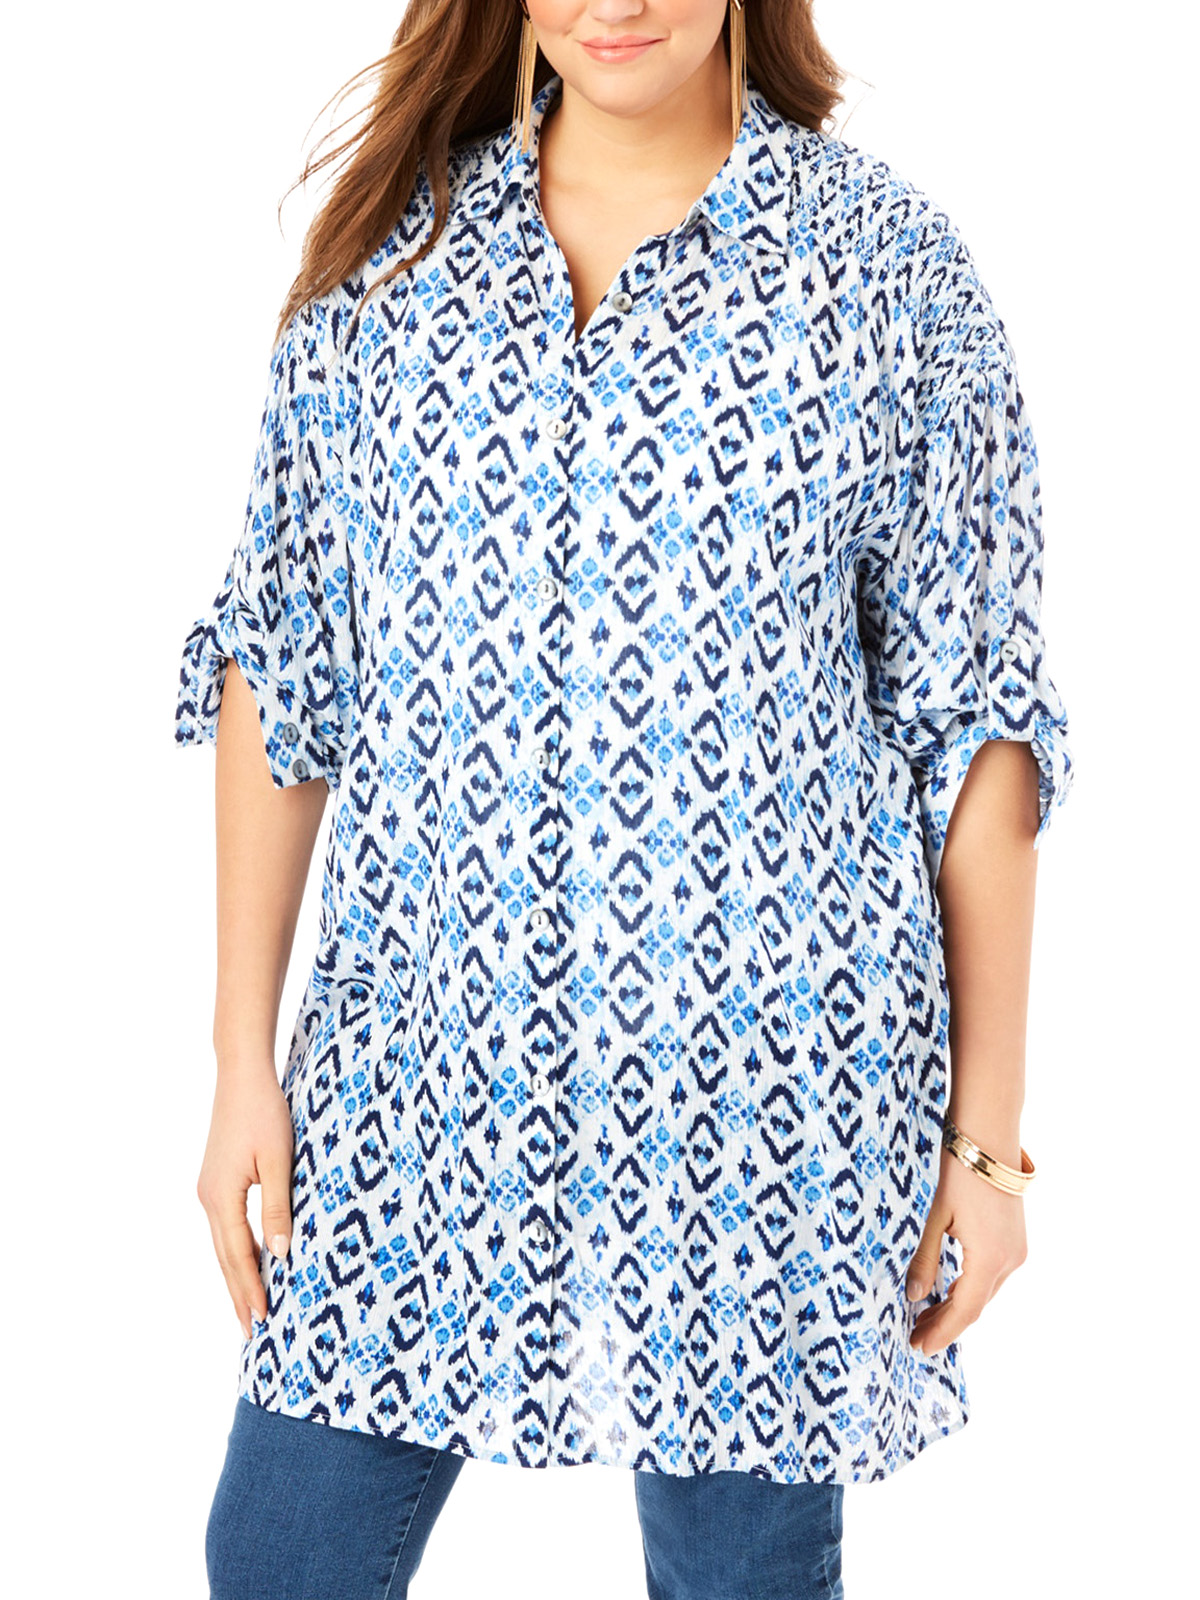 Roamans BLUE Smocked Crinkle Tunic Shirt - Plus Size 18 to 38 (US 16W to 36W)